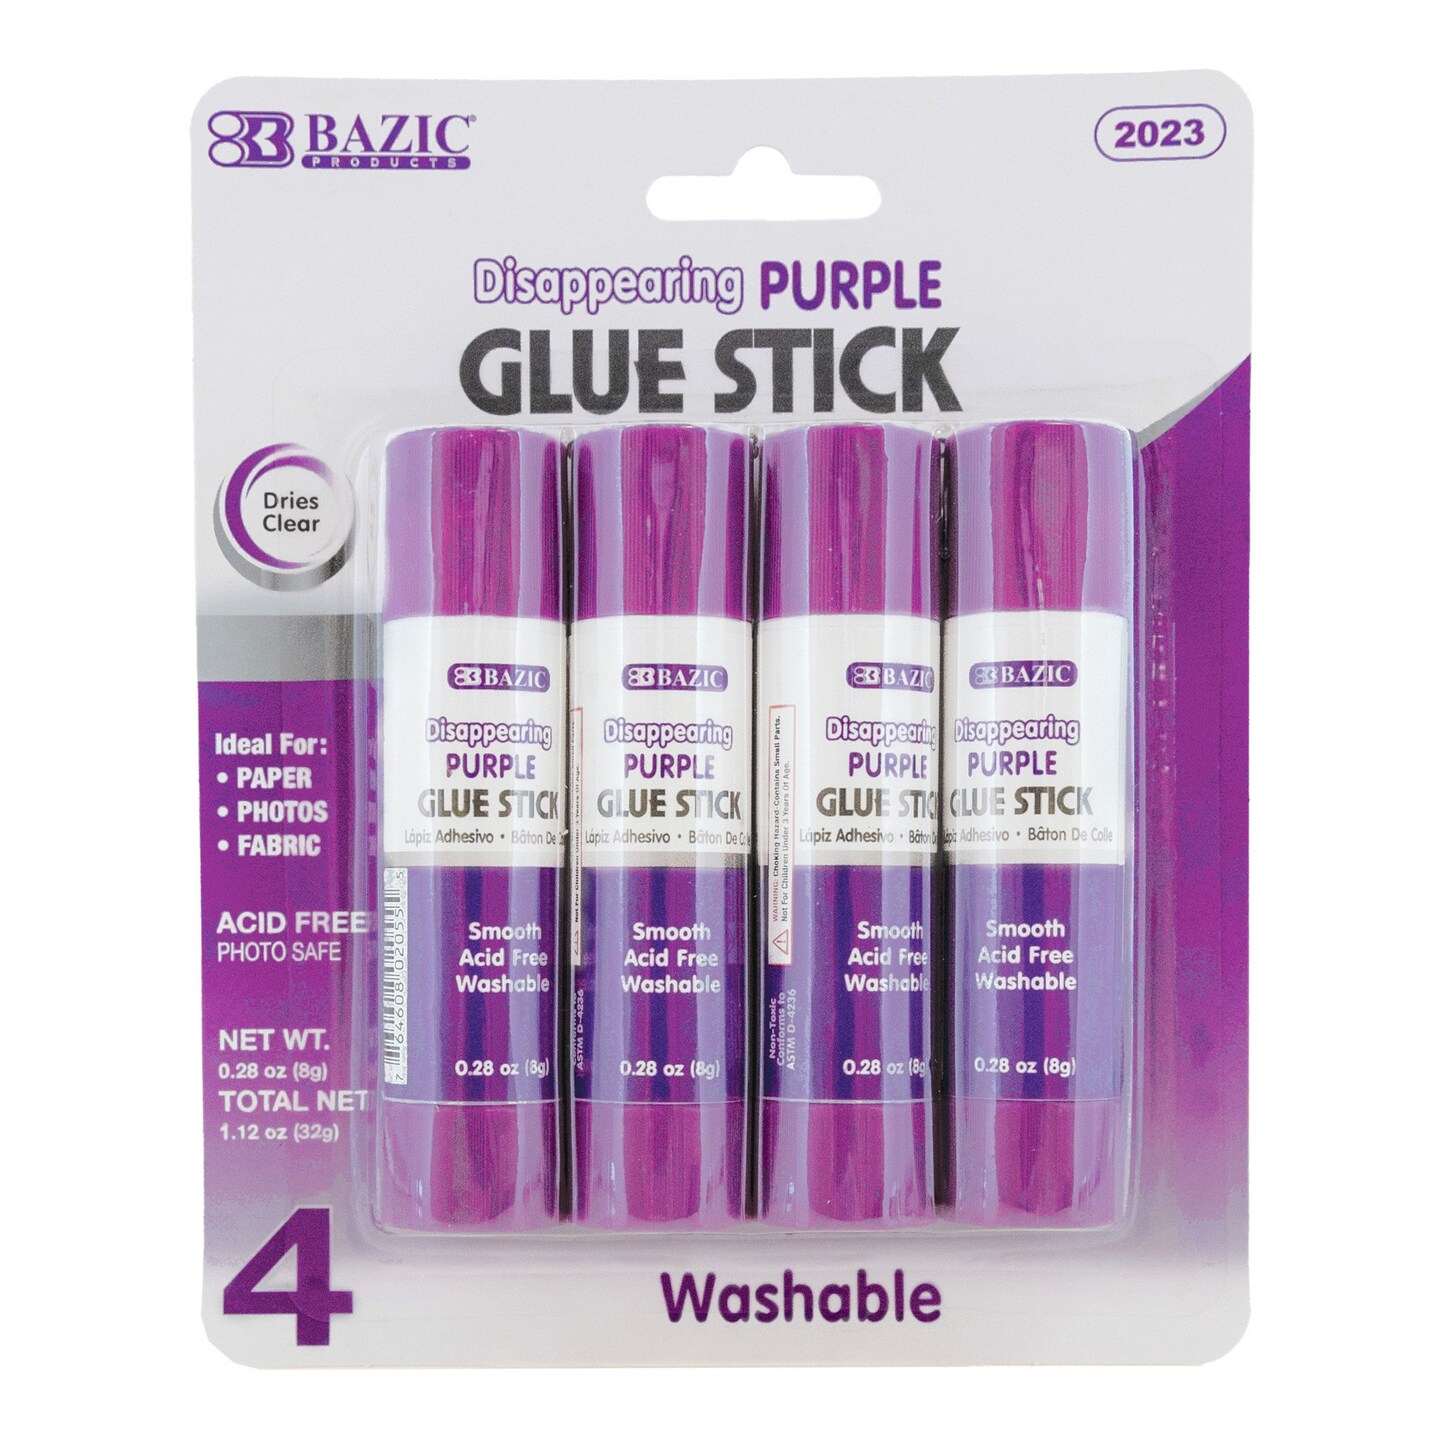 BAZIC Glue Stick Washable Disappearing Purple 0.28 oz (8g)(4/Pack)